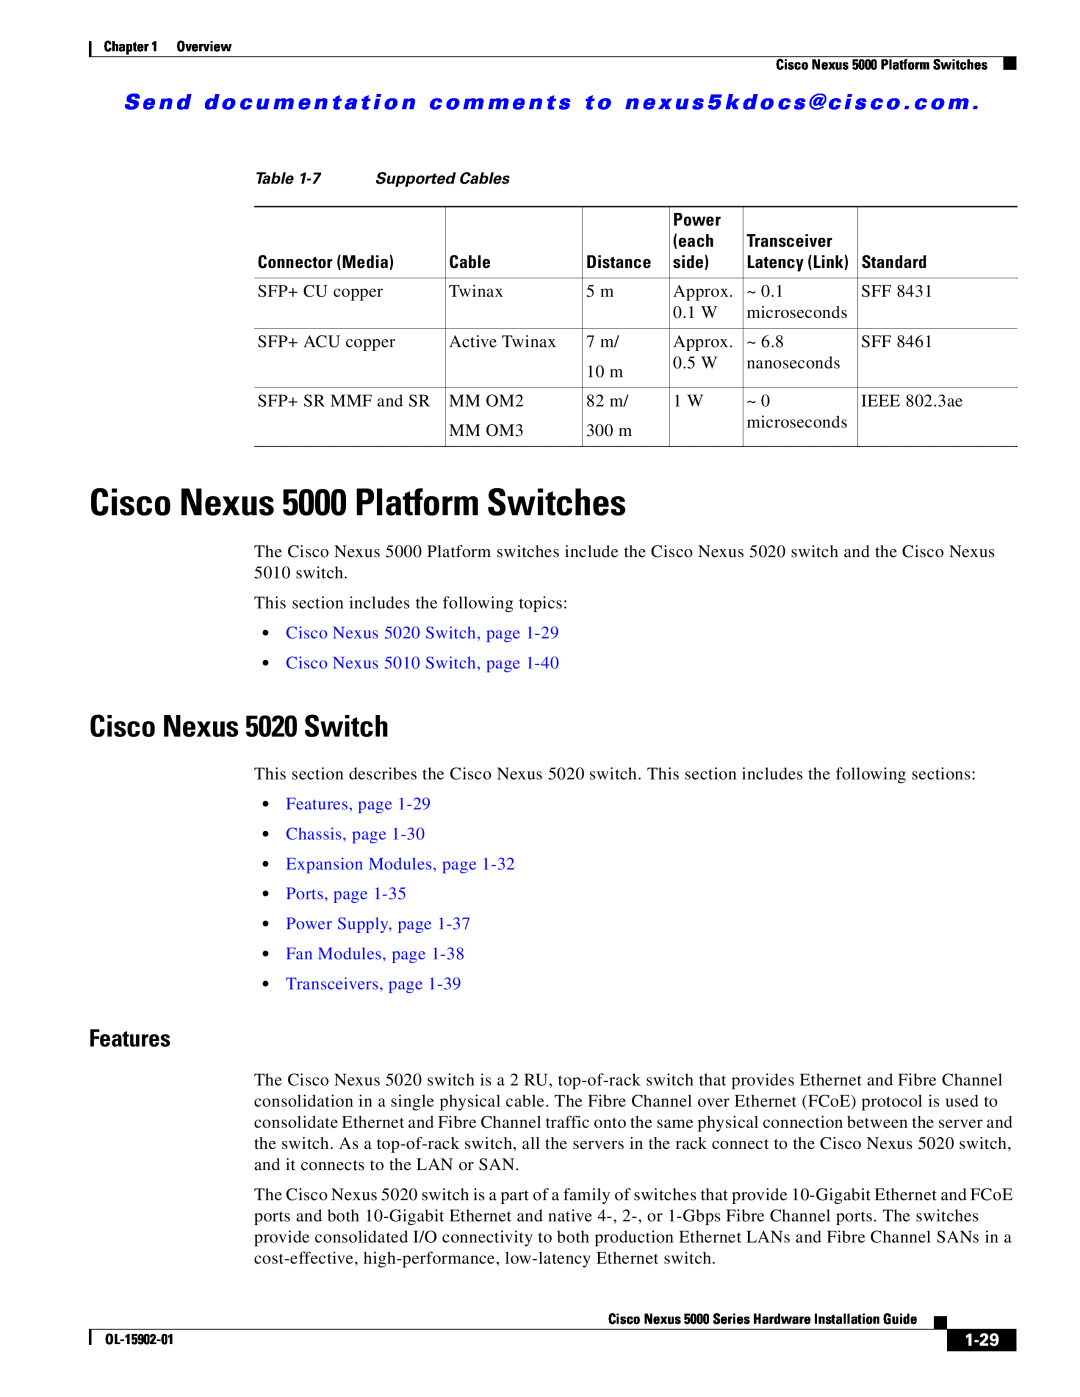 Cisco Systems 5000 manual Features, Cisco Nexus 5020 Switch, page Cisco Nexus 5010 Switch, page, 1-29 